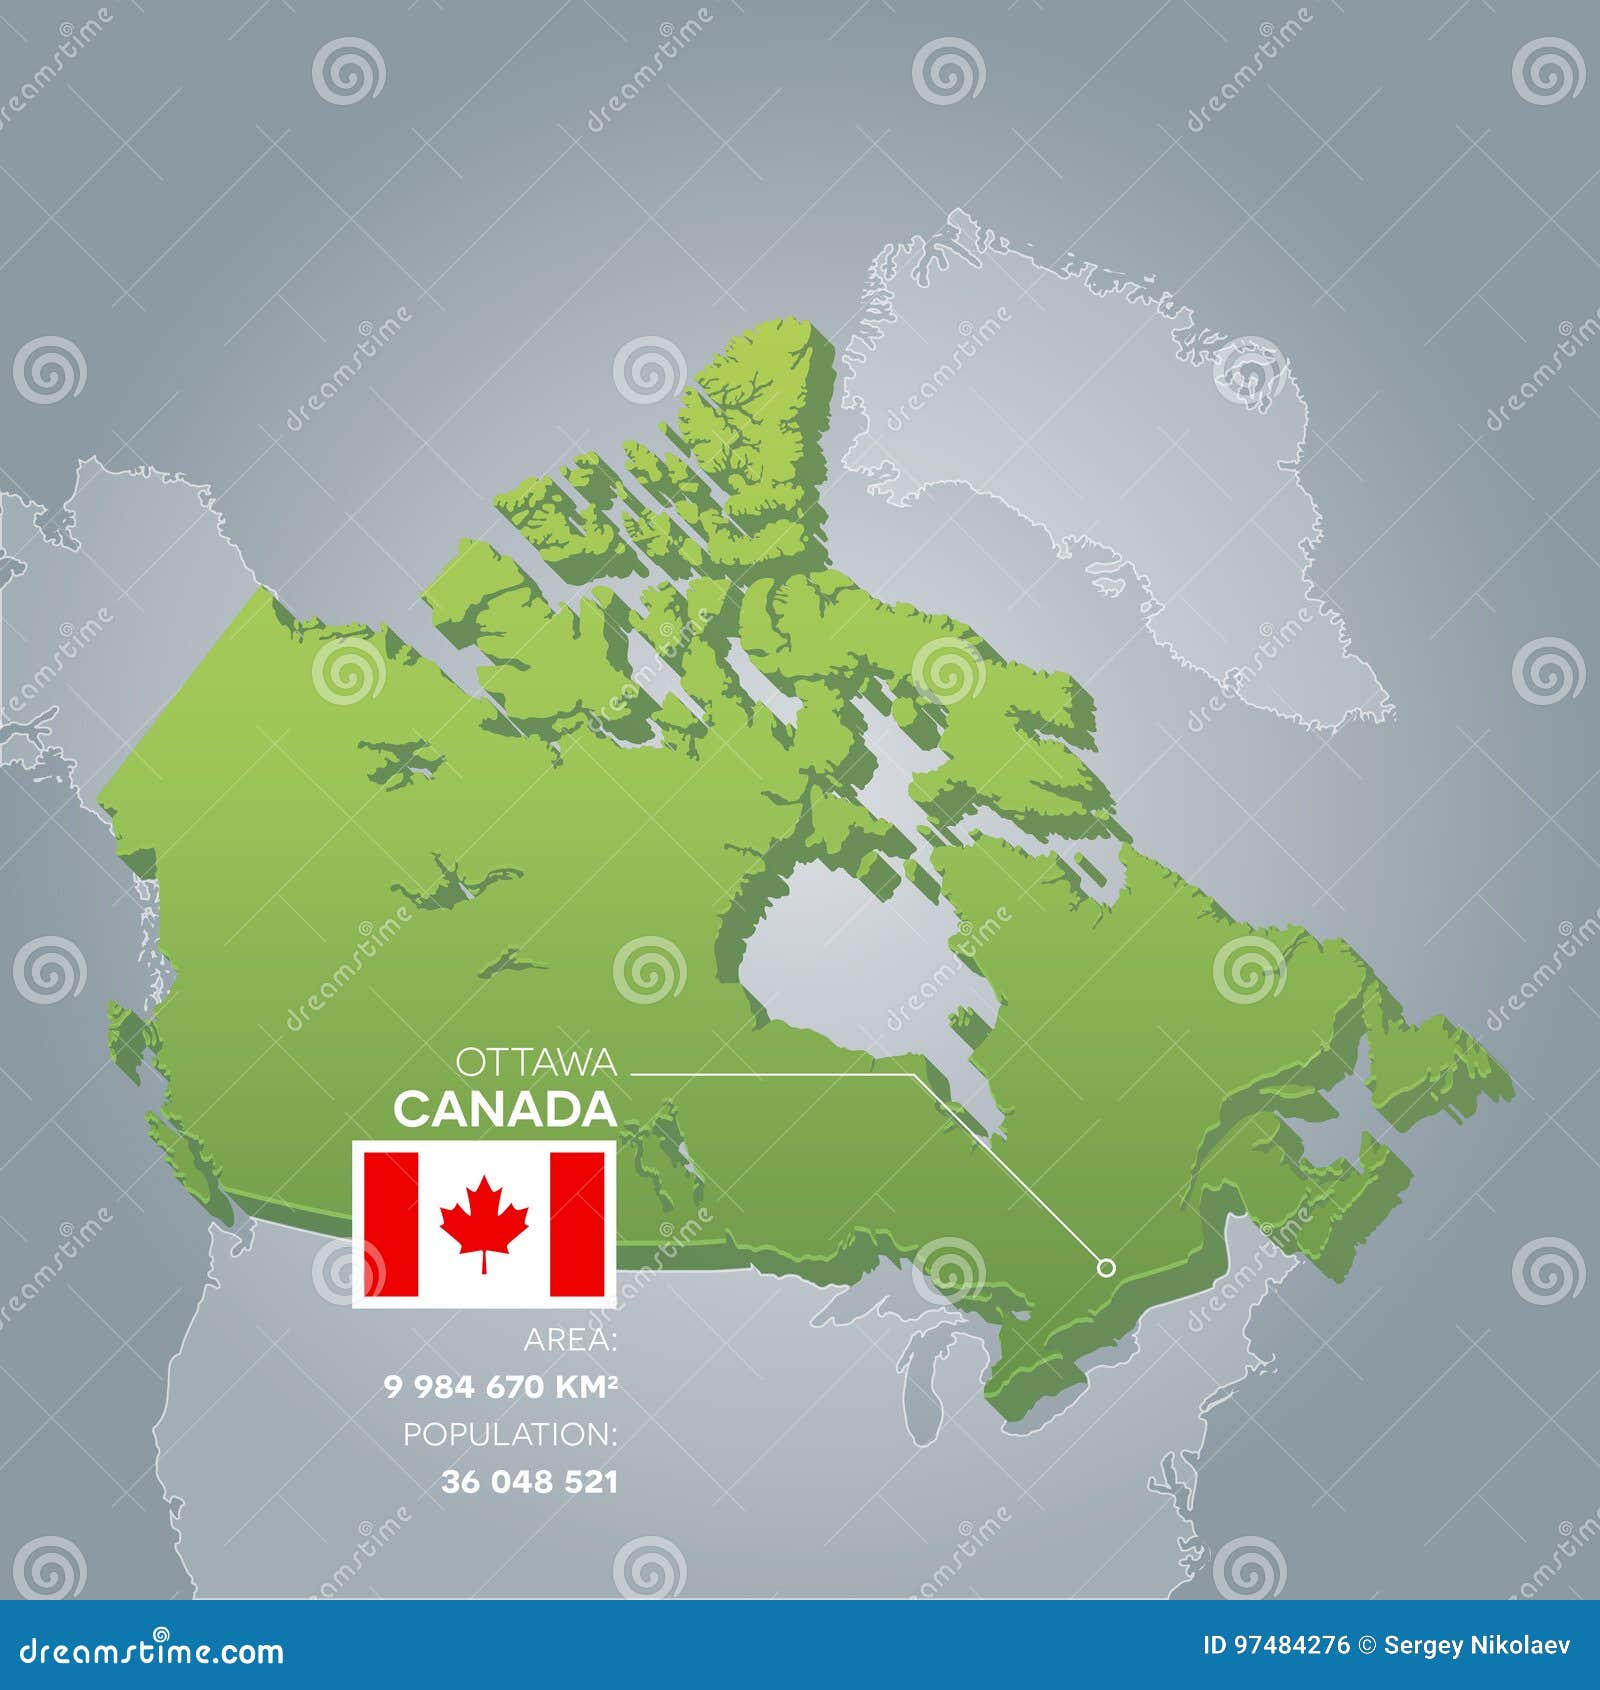 Канада 3. Карта Канады 3d. Рельеф Канады карта. Оттава на карте Канады. Карта Канады вектор.